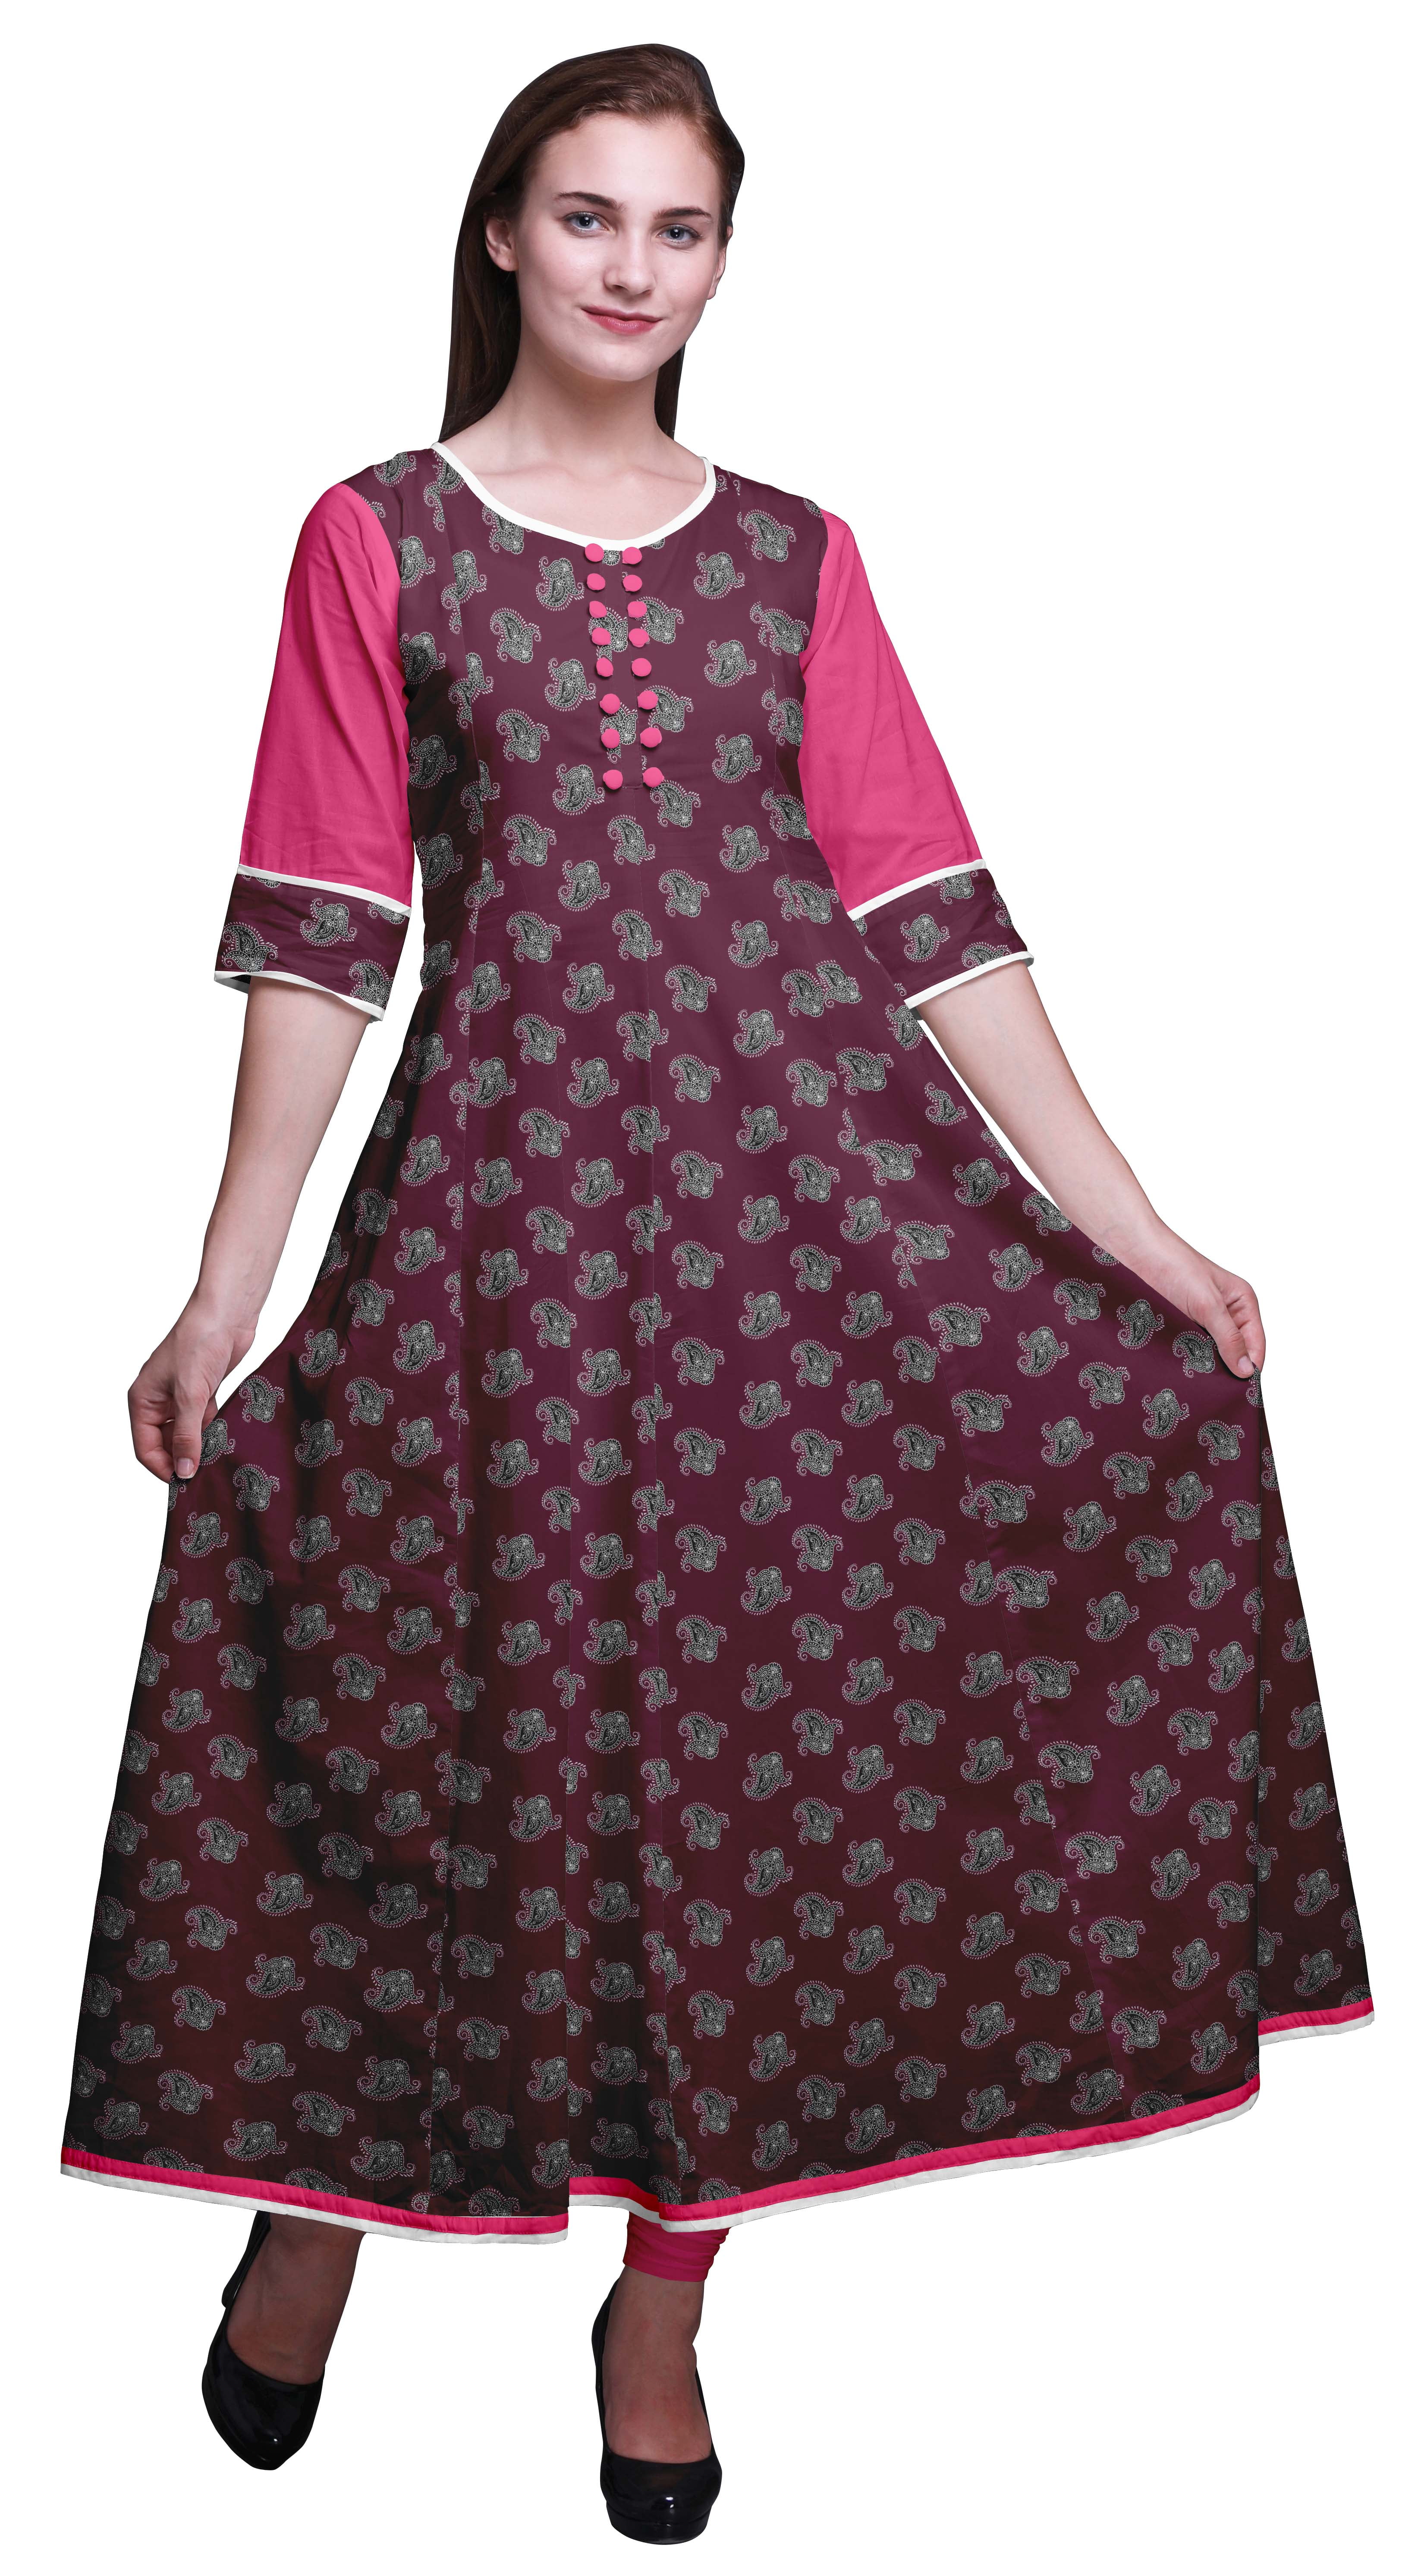 Details about   Indian Women Kurti Kurta Anarkali Ethnic Top Tunic Designer Dress Top only S 